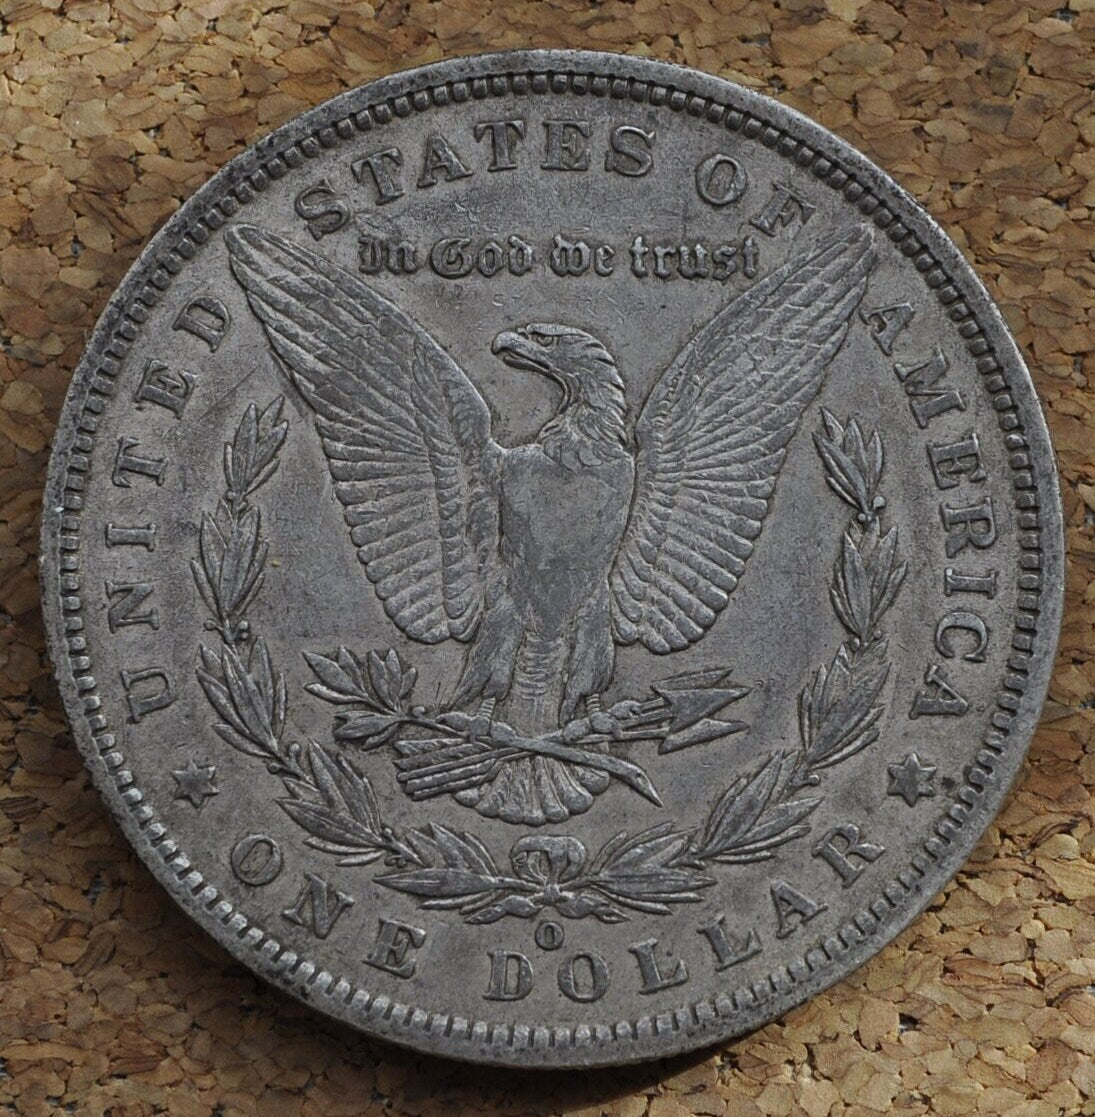 1887-O Morgan Silver Dollar - AU (About Uncirculated) Grade / Condition - 1887-O Morgan Dollar - 1887 Silver Dollar - Good Date